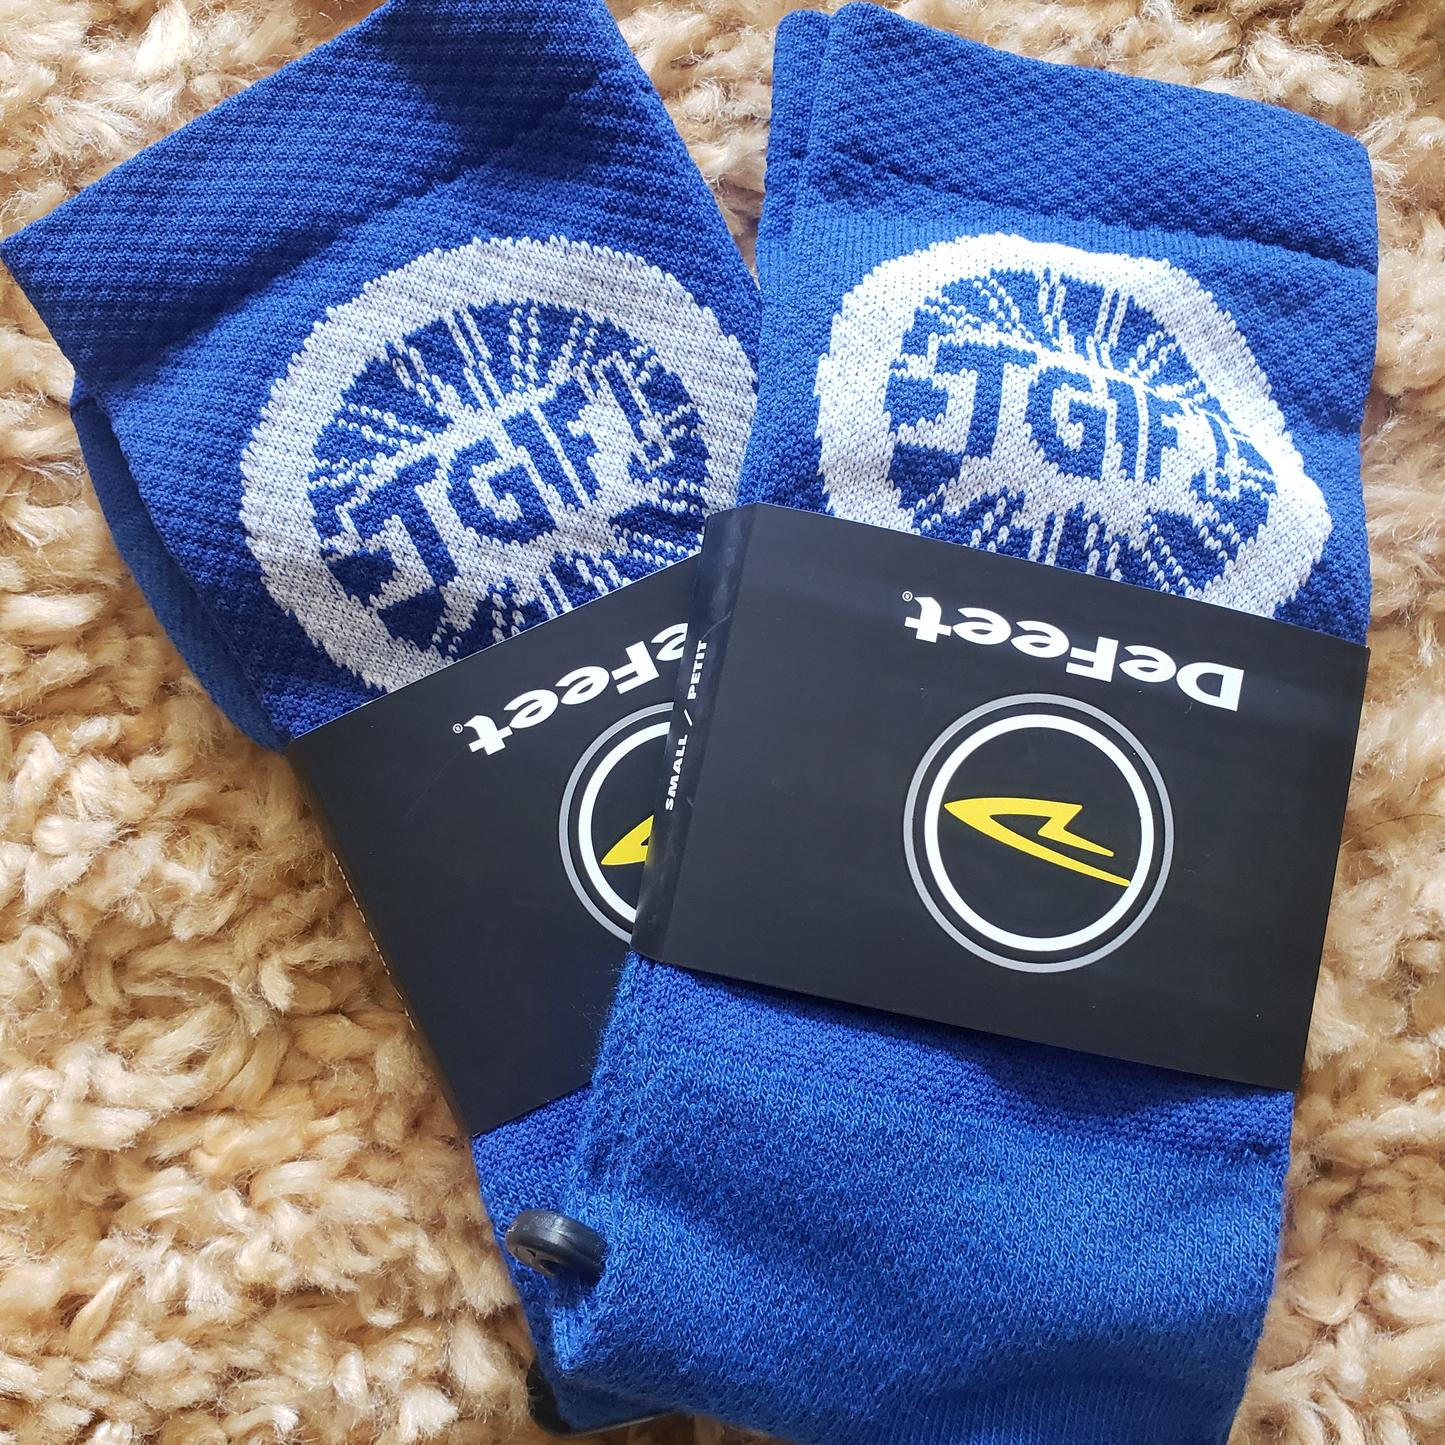 TGIF MTB socks